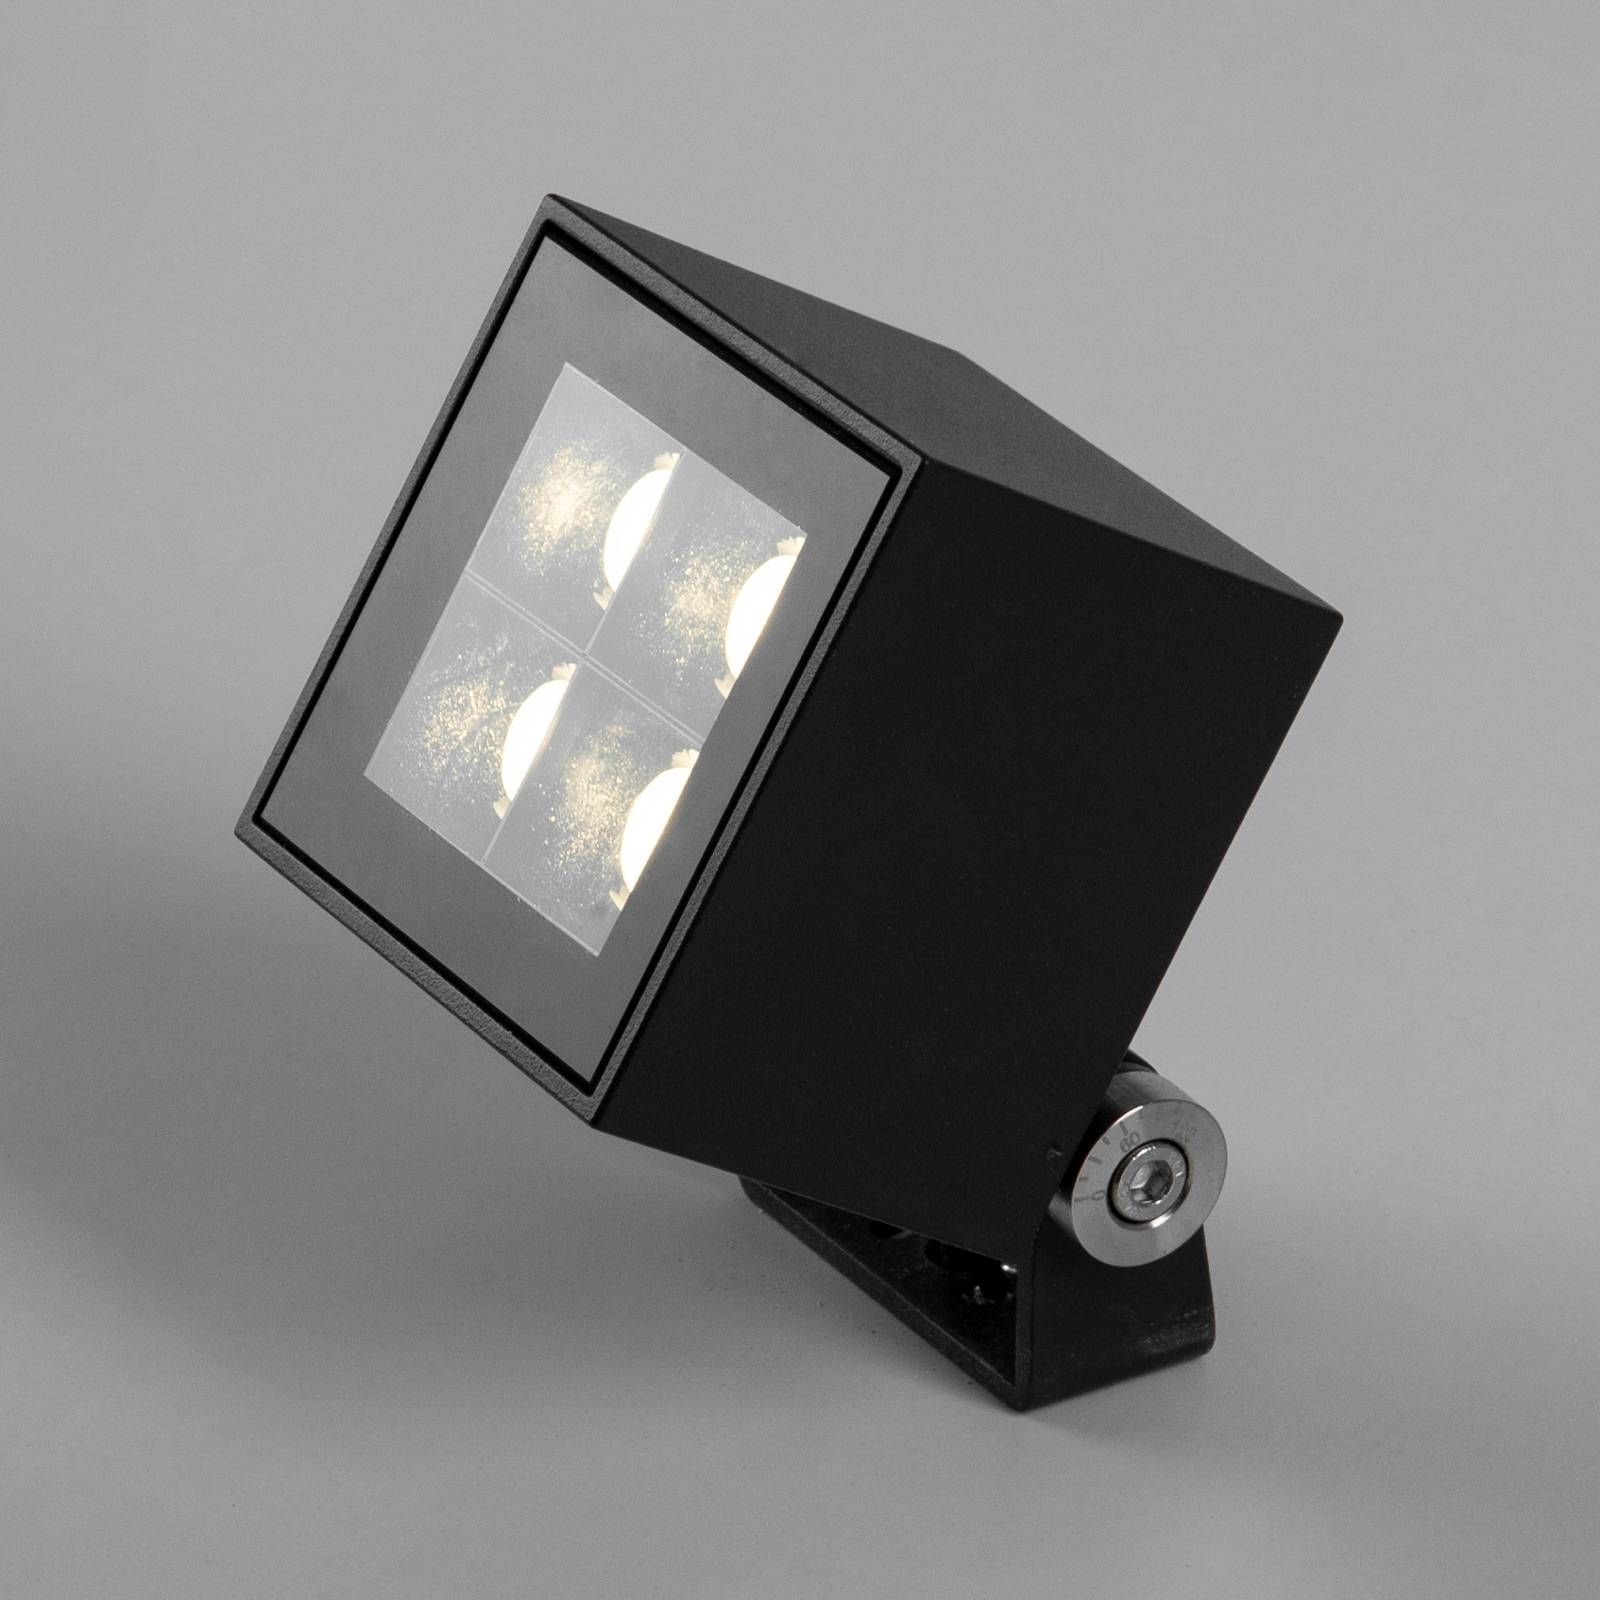 BRUMBERG Blokk LED bodové svetlá vonkajšia, 7x7 cm, hliník, sklo, 8.4W, P: 7 cm, L: 7 cm, K: 11cm